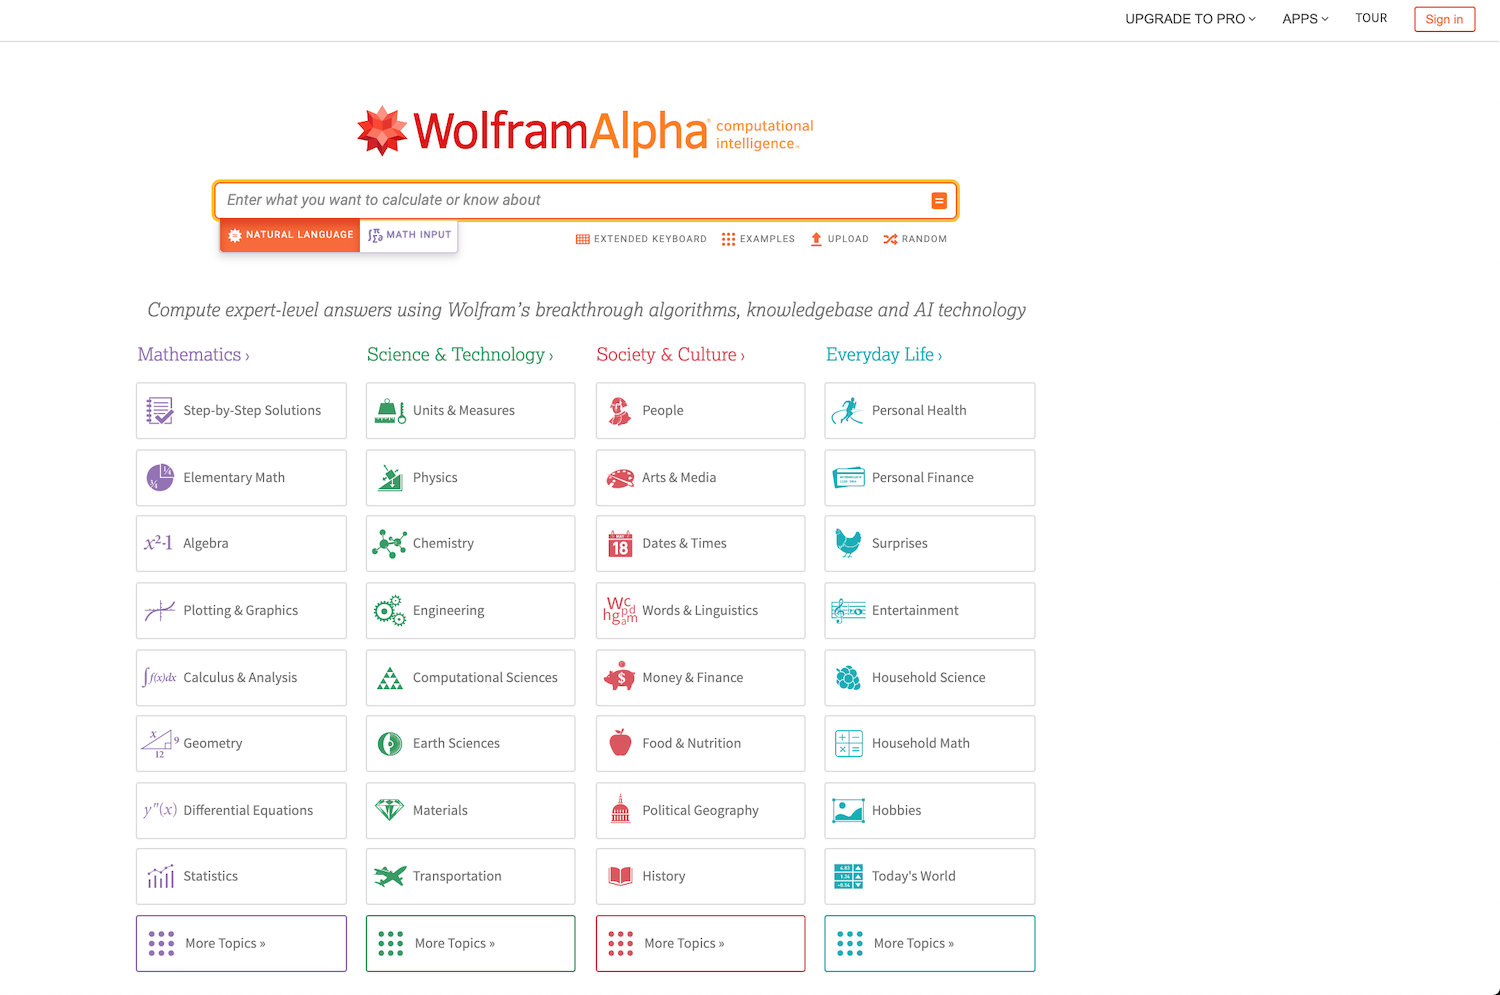 Motor de búsqueda WolframAlpha.